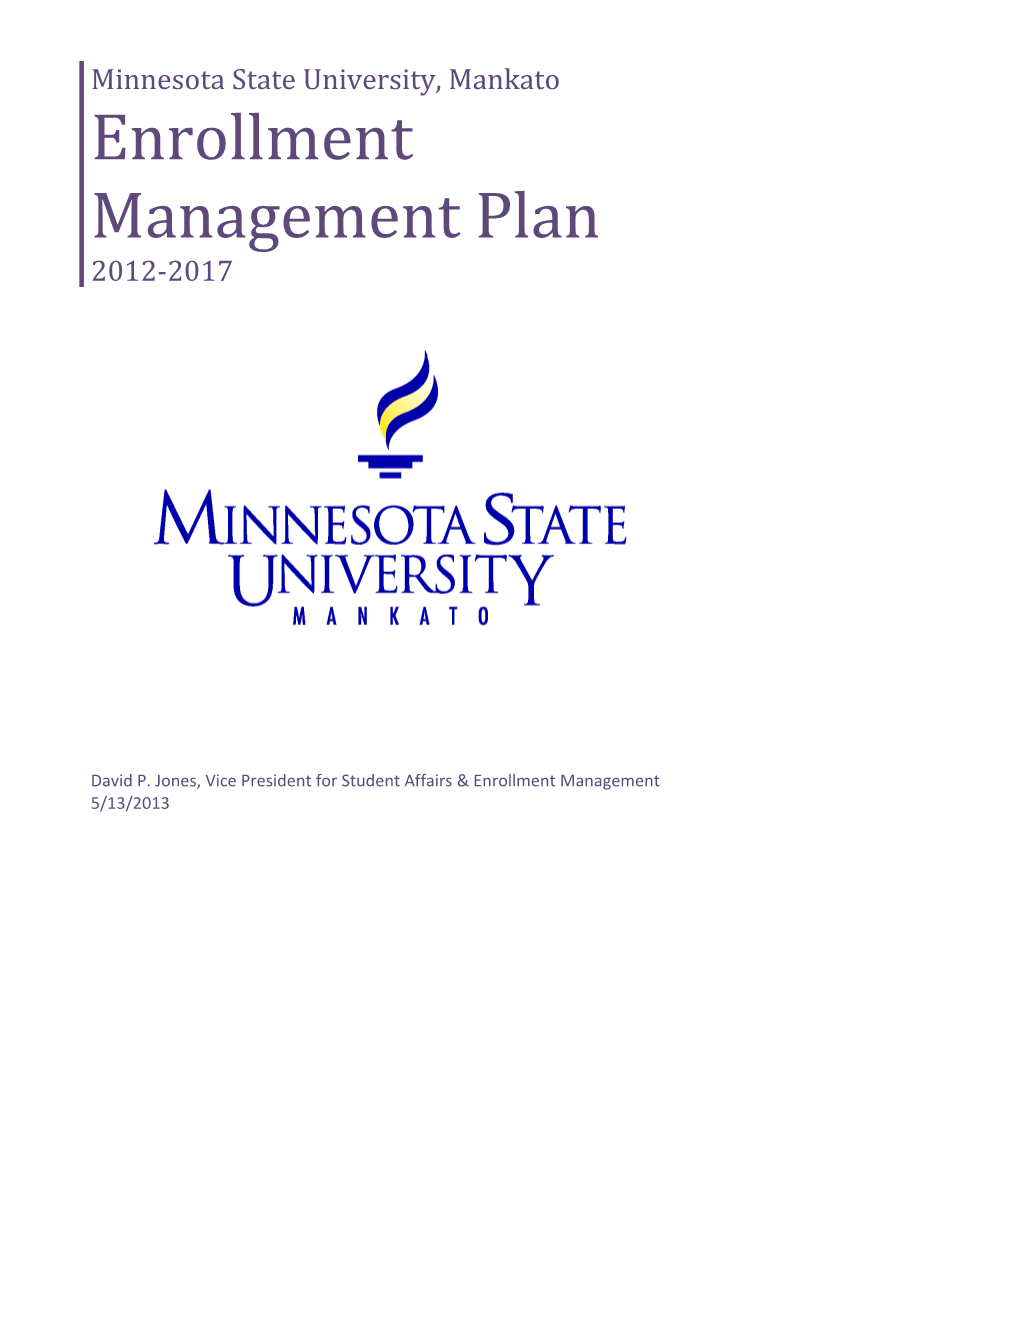 Enrollment Management Plan